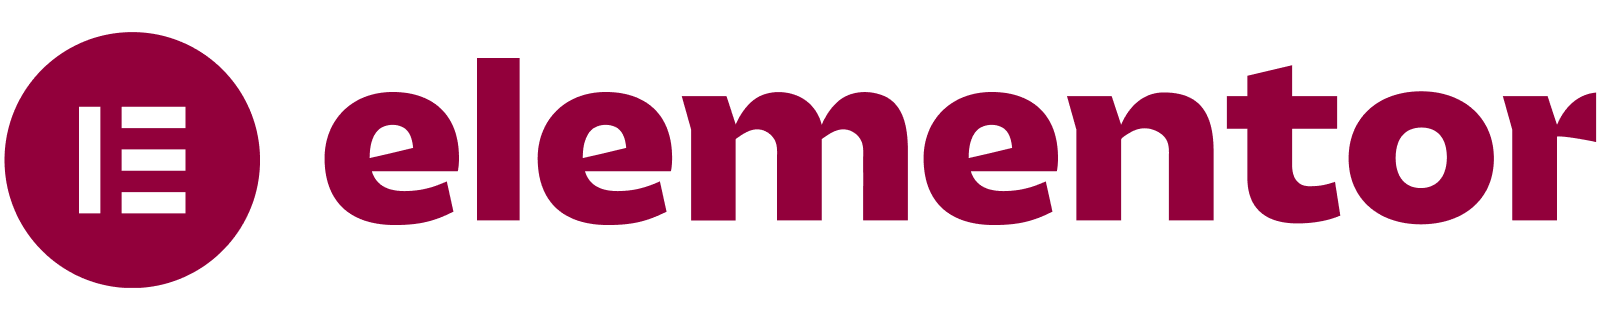 Elementor logo transparent